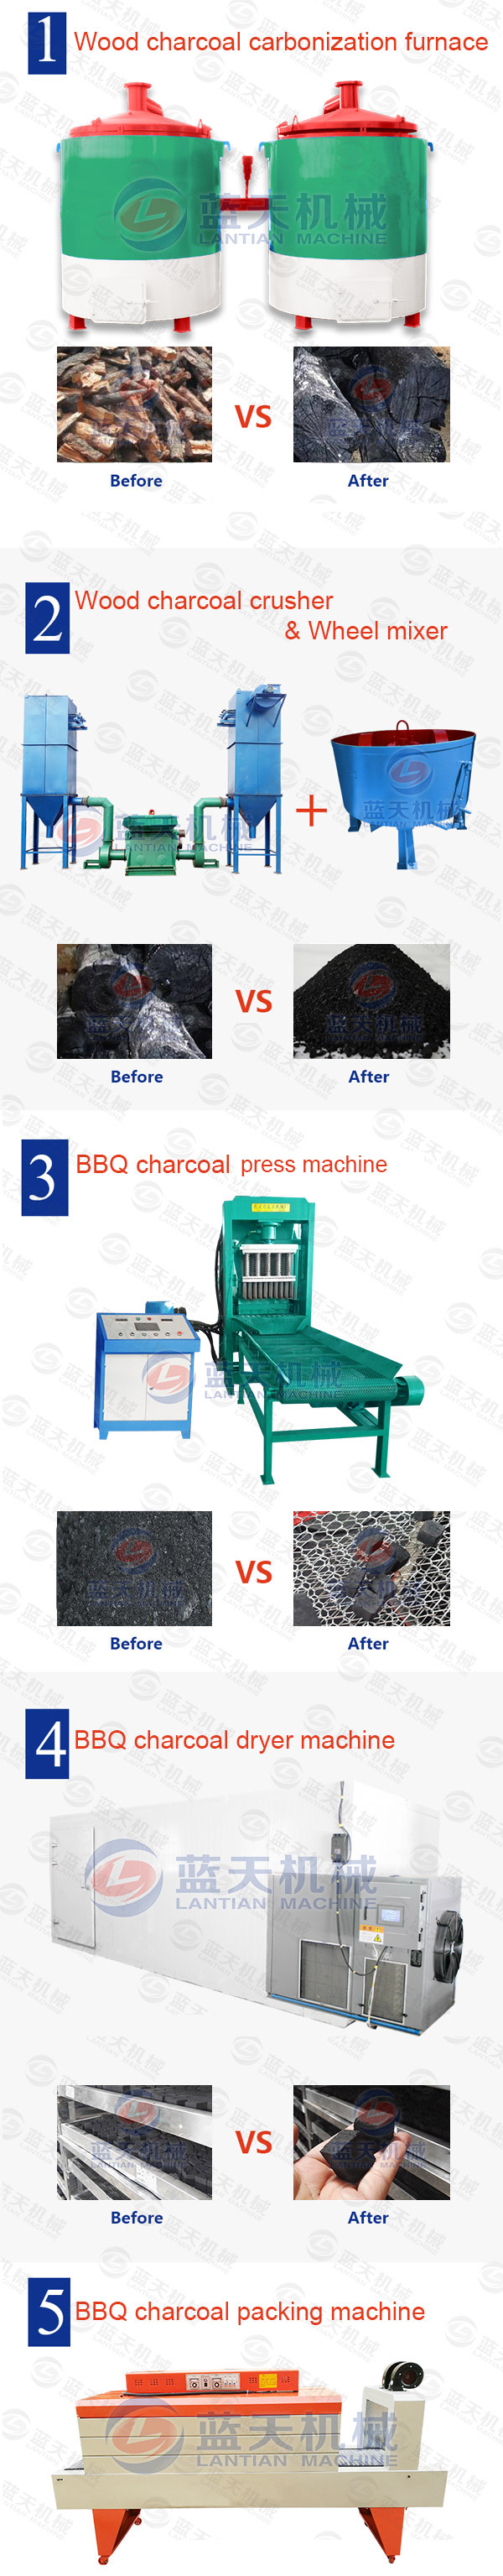 BBQ charcoal press briquetting machine